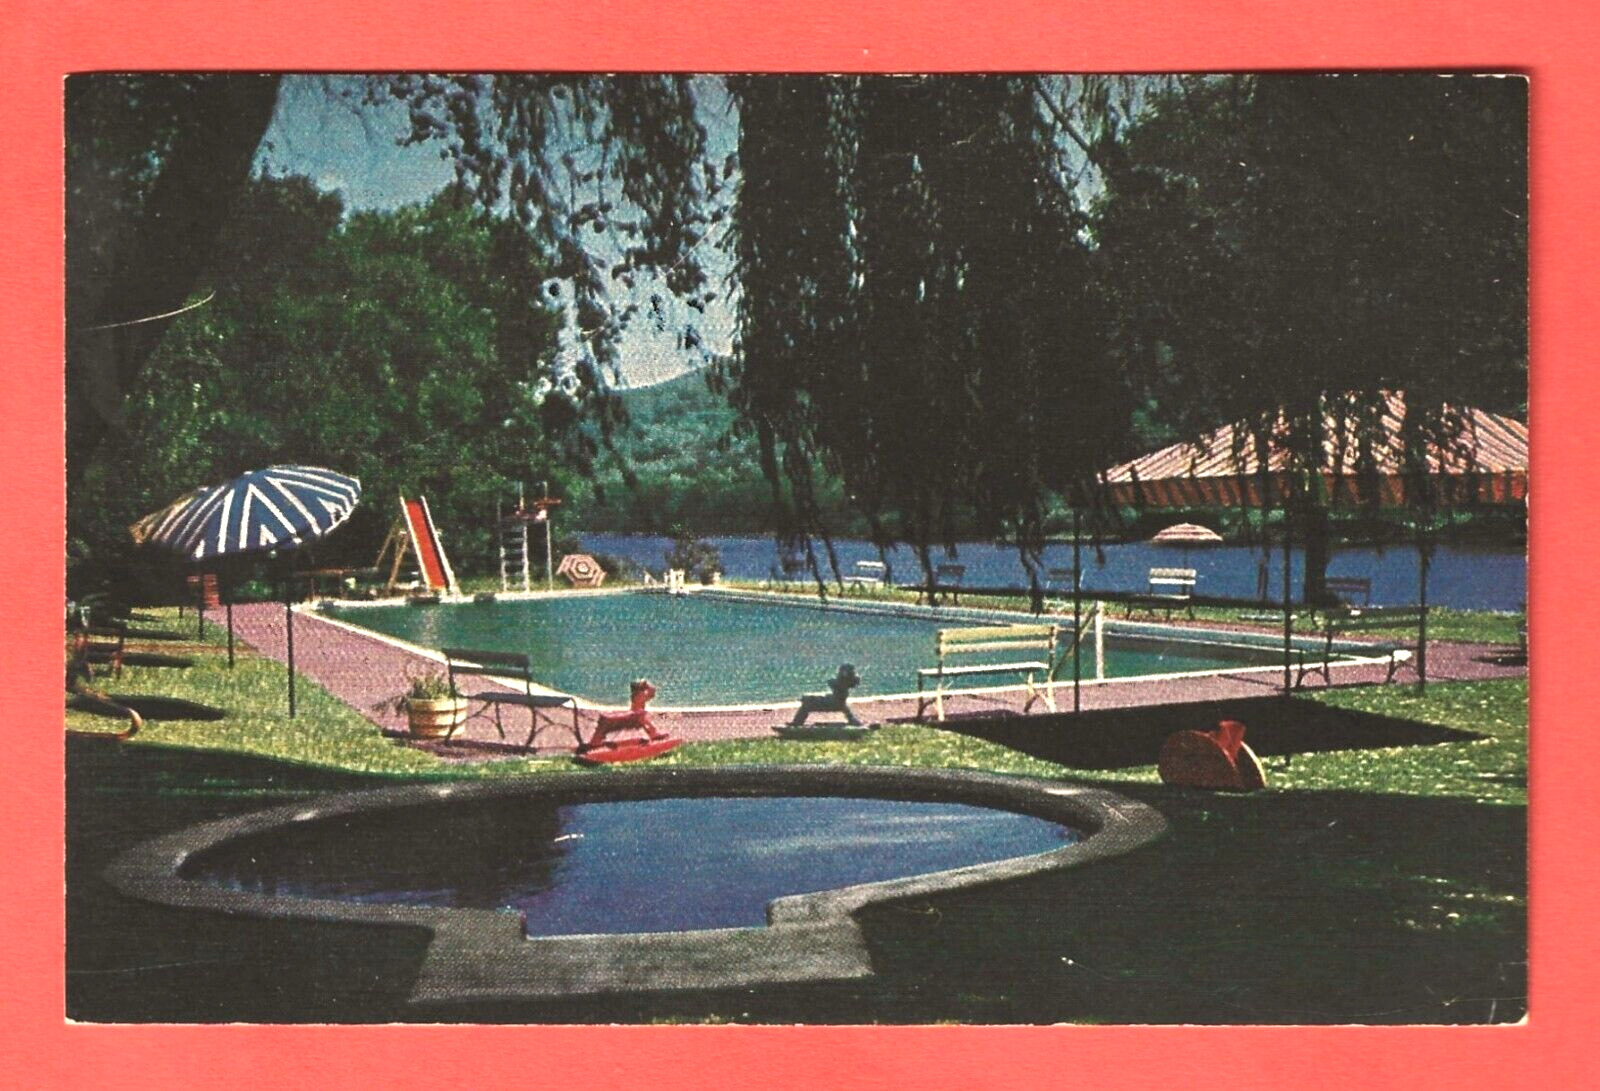 SHAWNEE INN, SHAWNEE-ON-DELAWARE, PA. – SWIMMING POOL - 1950s Postcard